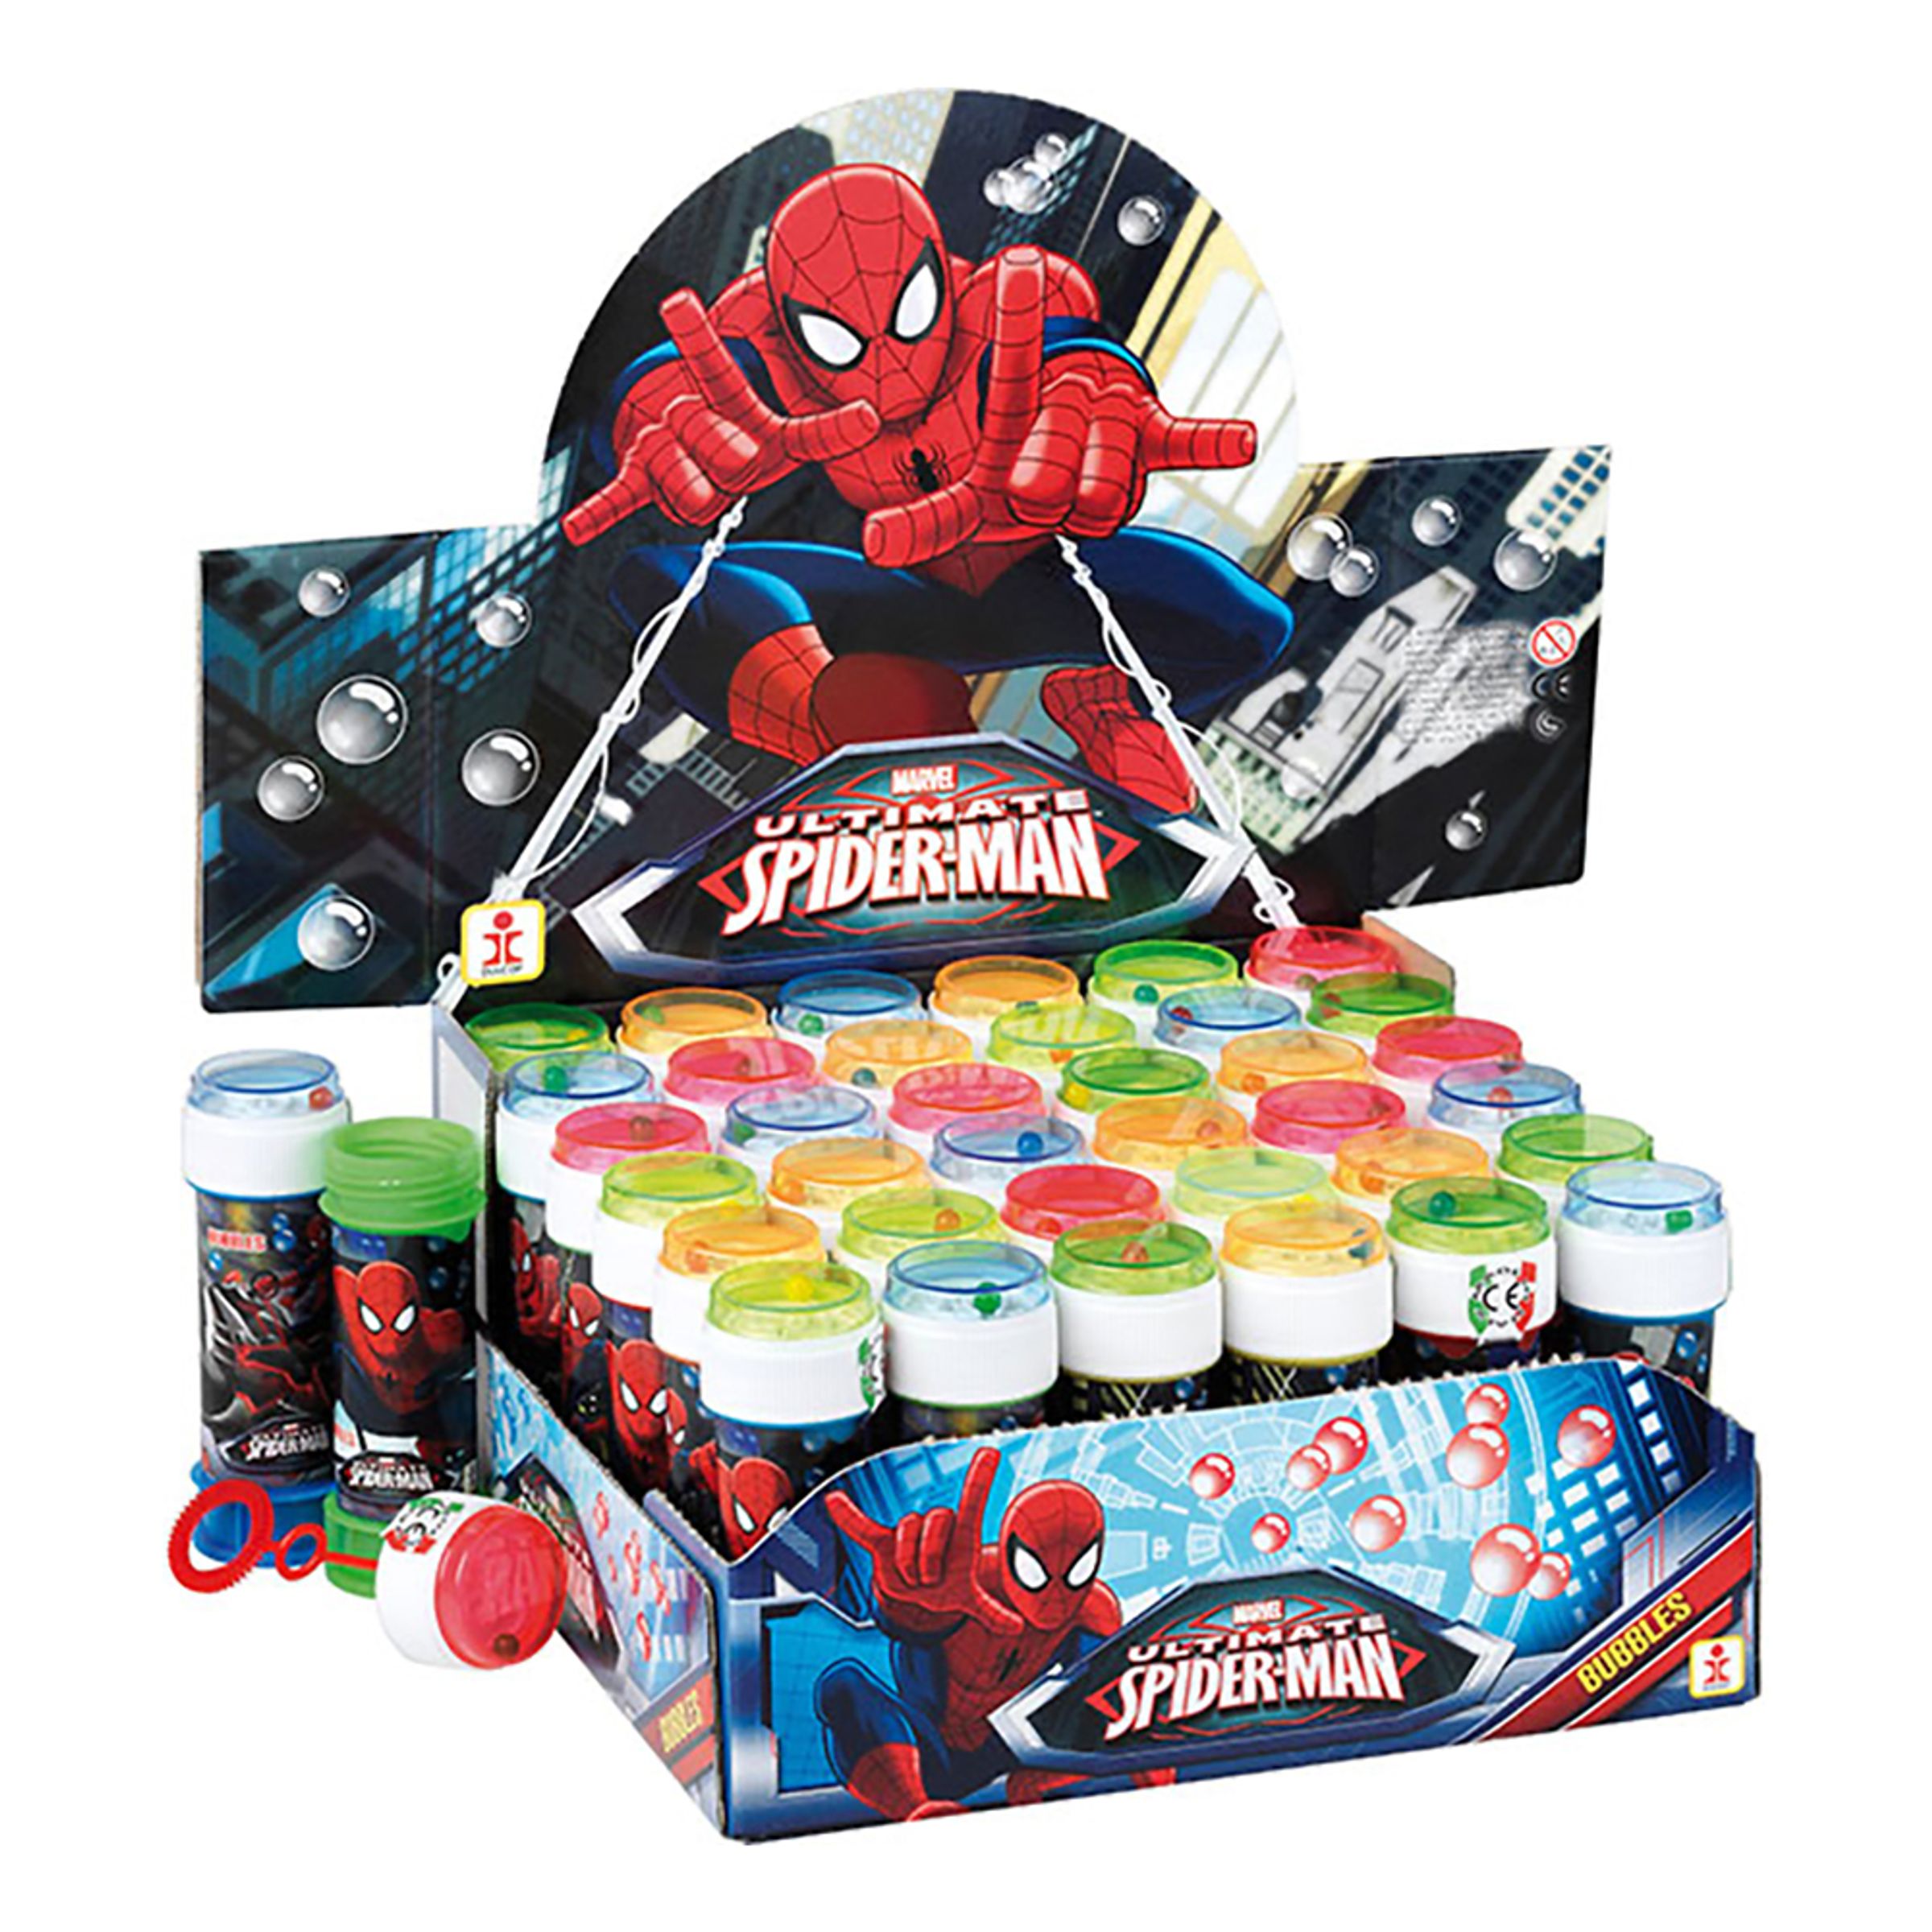 Såpbubblor Spiderman - 1-pack